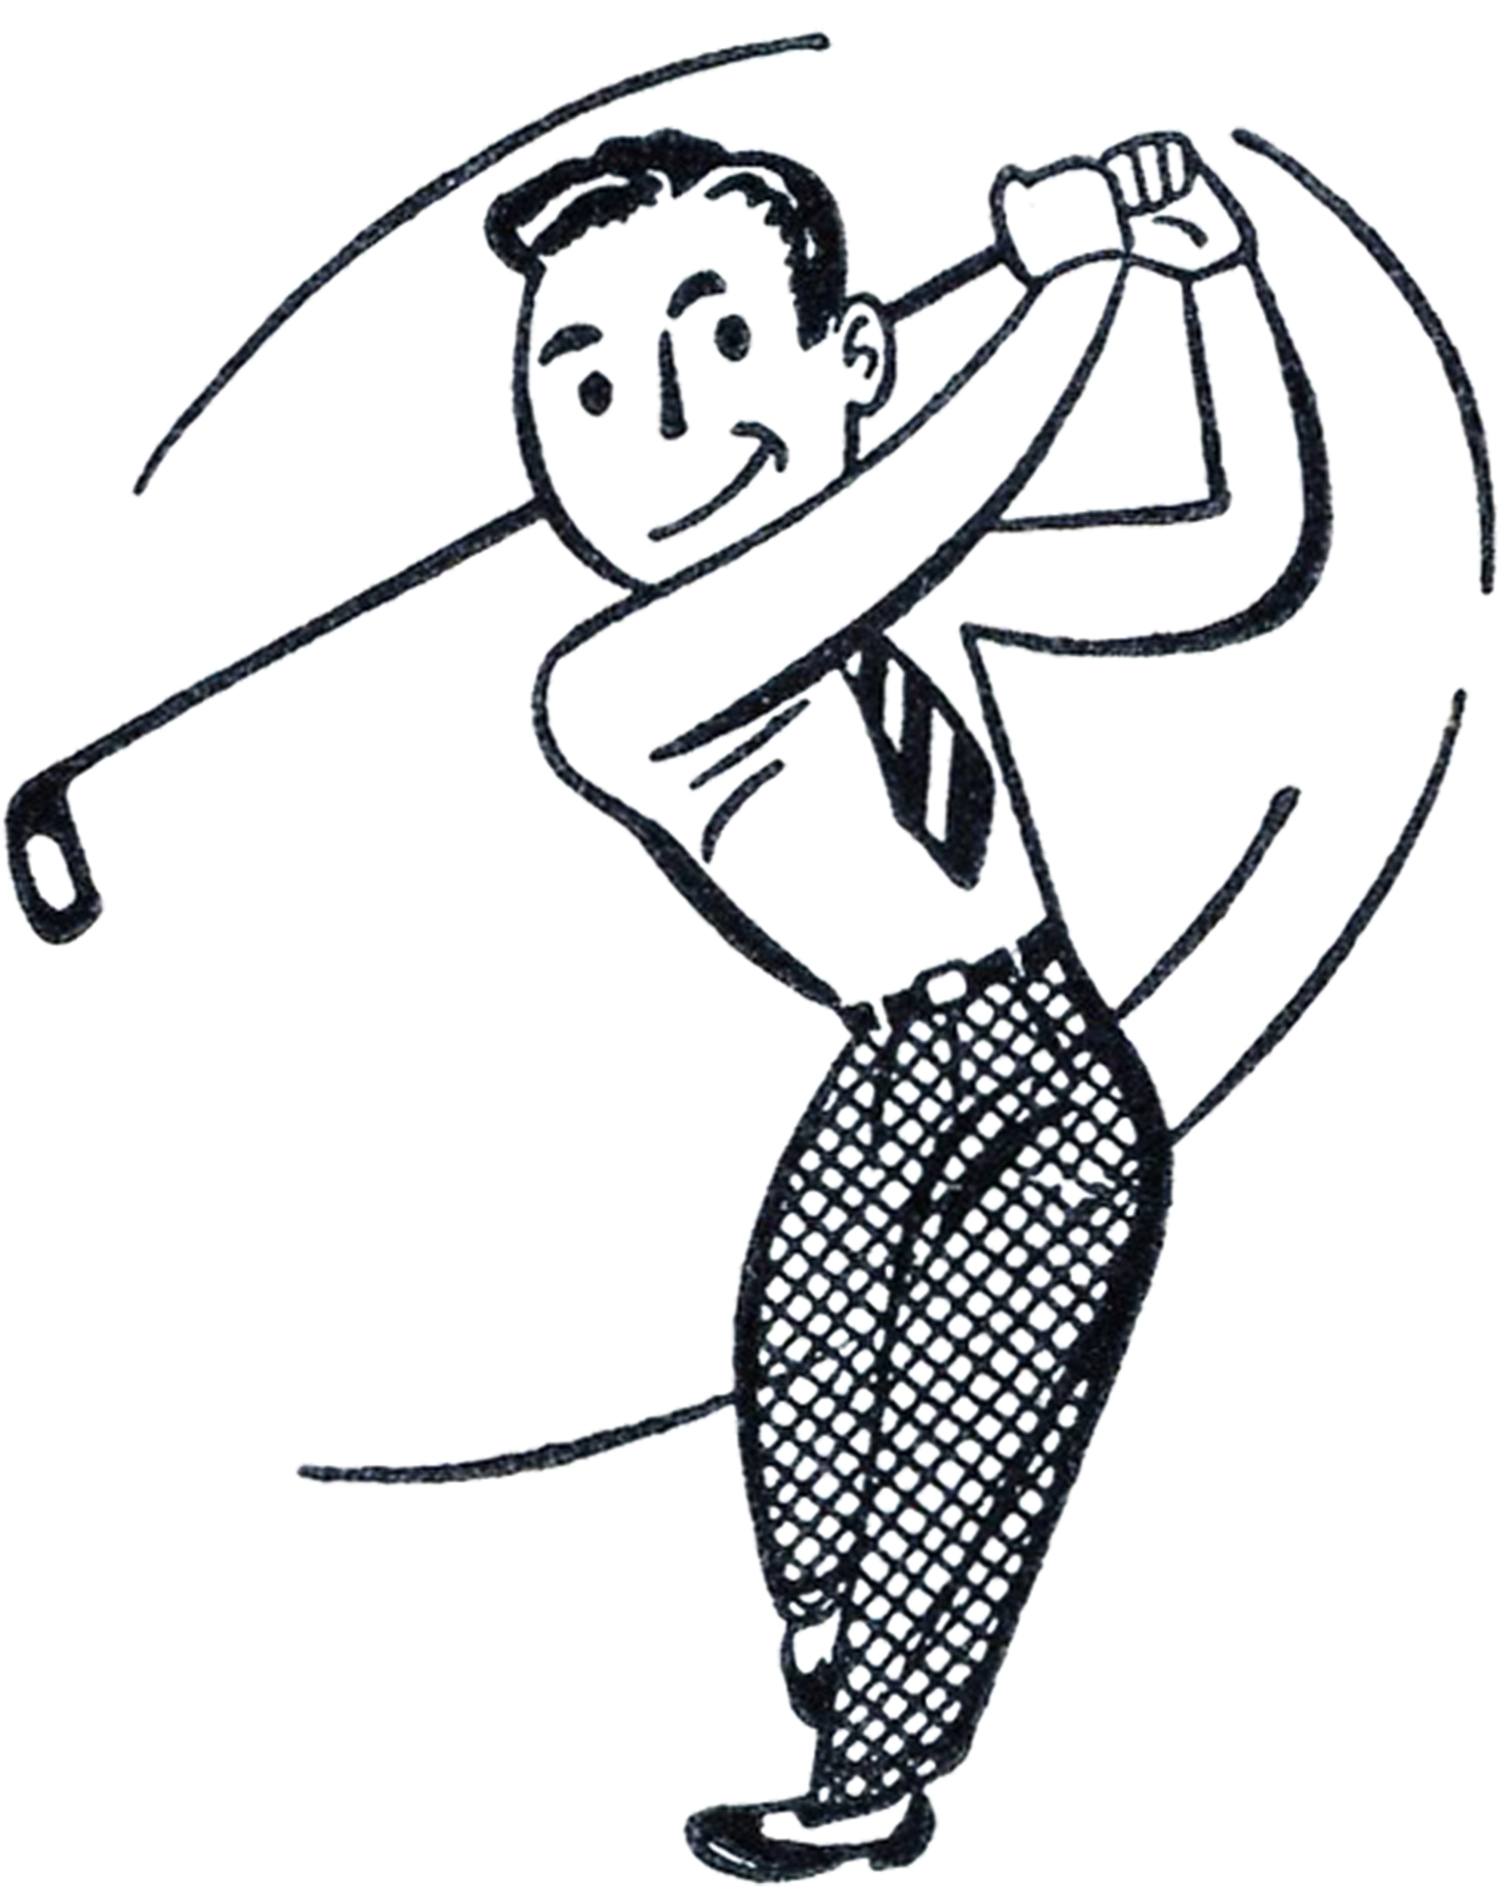 Retro-Golf-Man-Clip-Art-GraphicsFairy - The Graphics Fairy